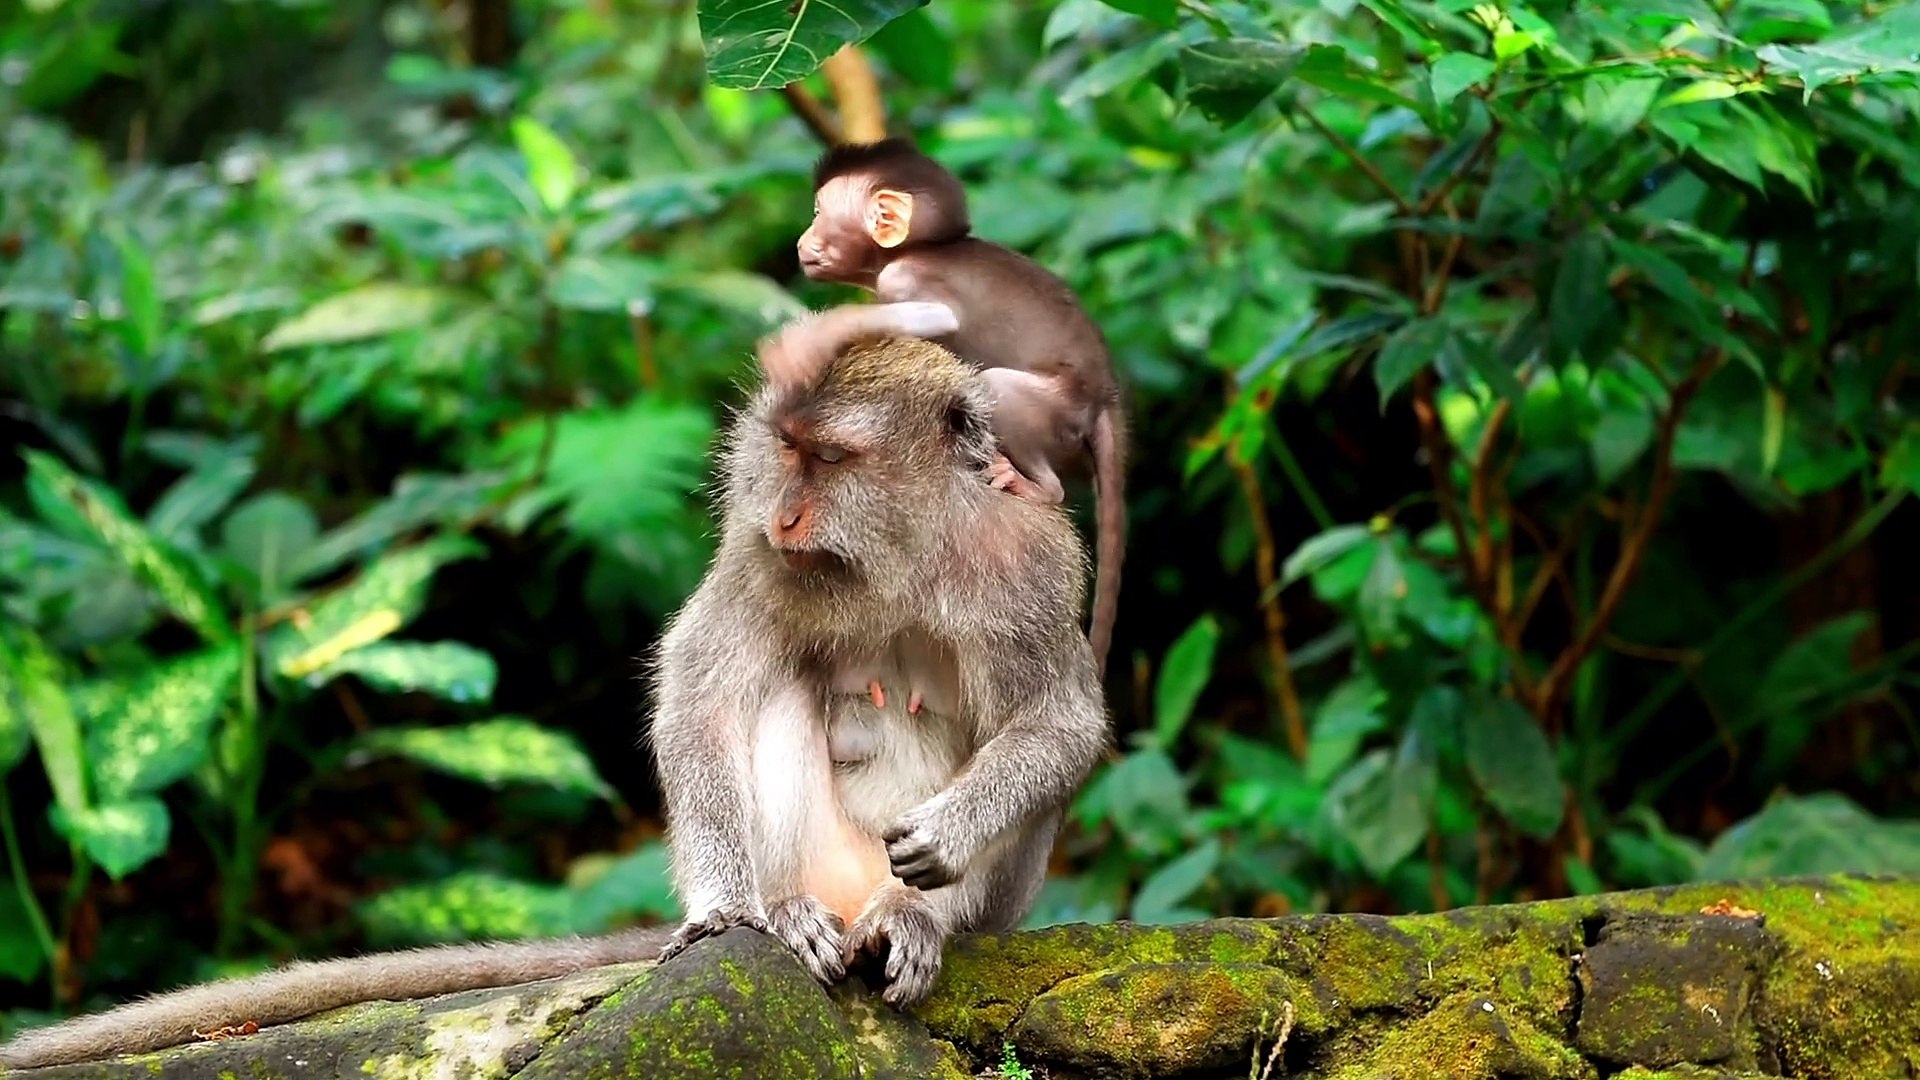 Funny monkey videos | Monkey world for kids 2022 - video Dailymotion